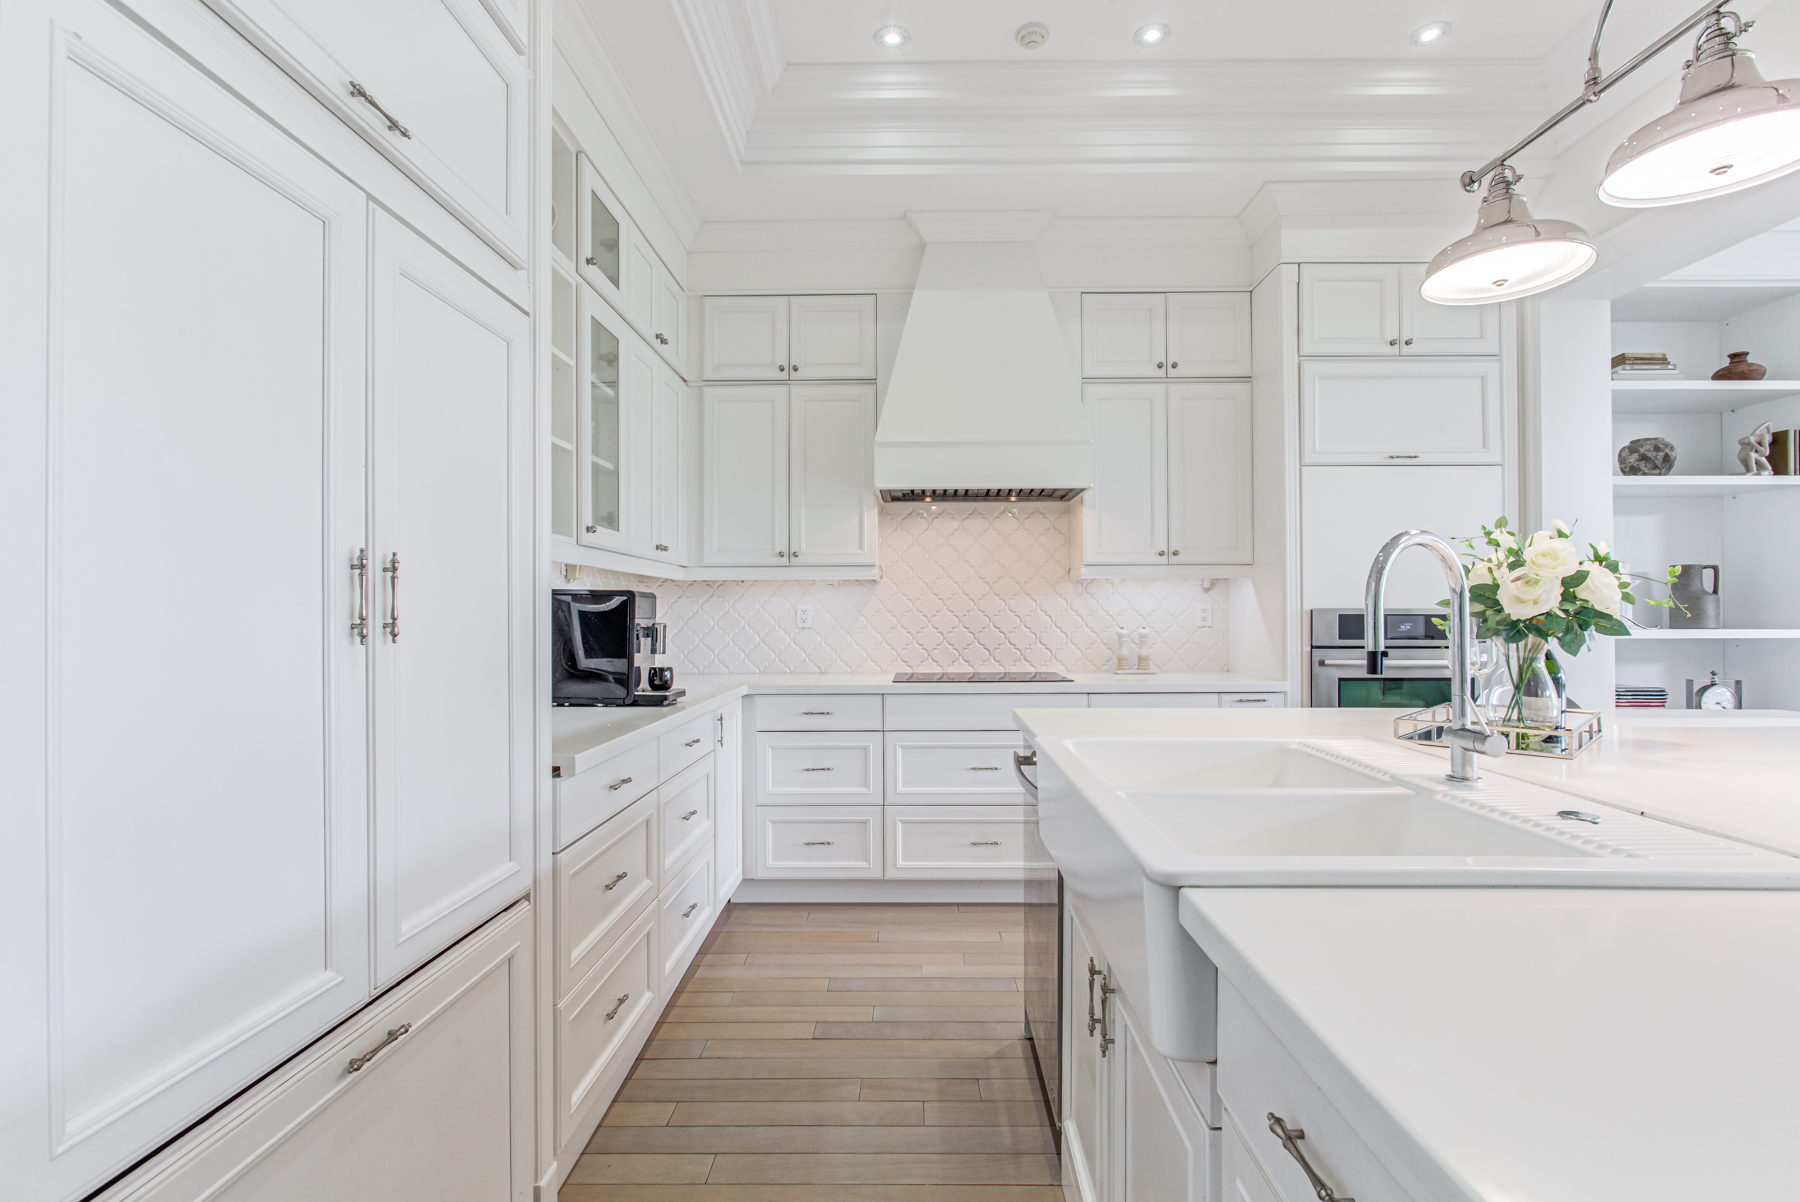 Gorgeous kitchen with quartz counters and stylish ceramic back-splash.